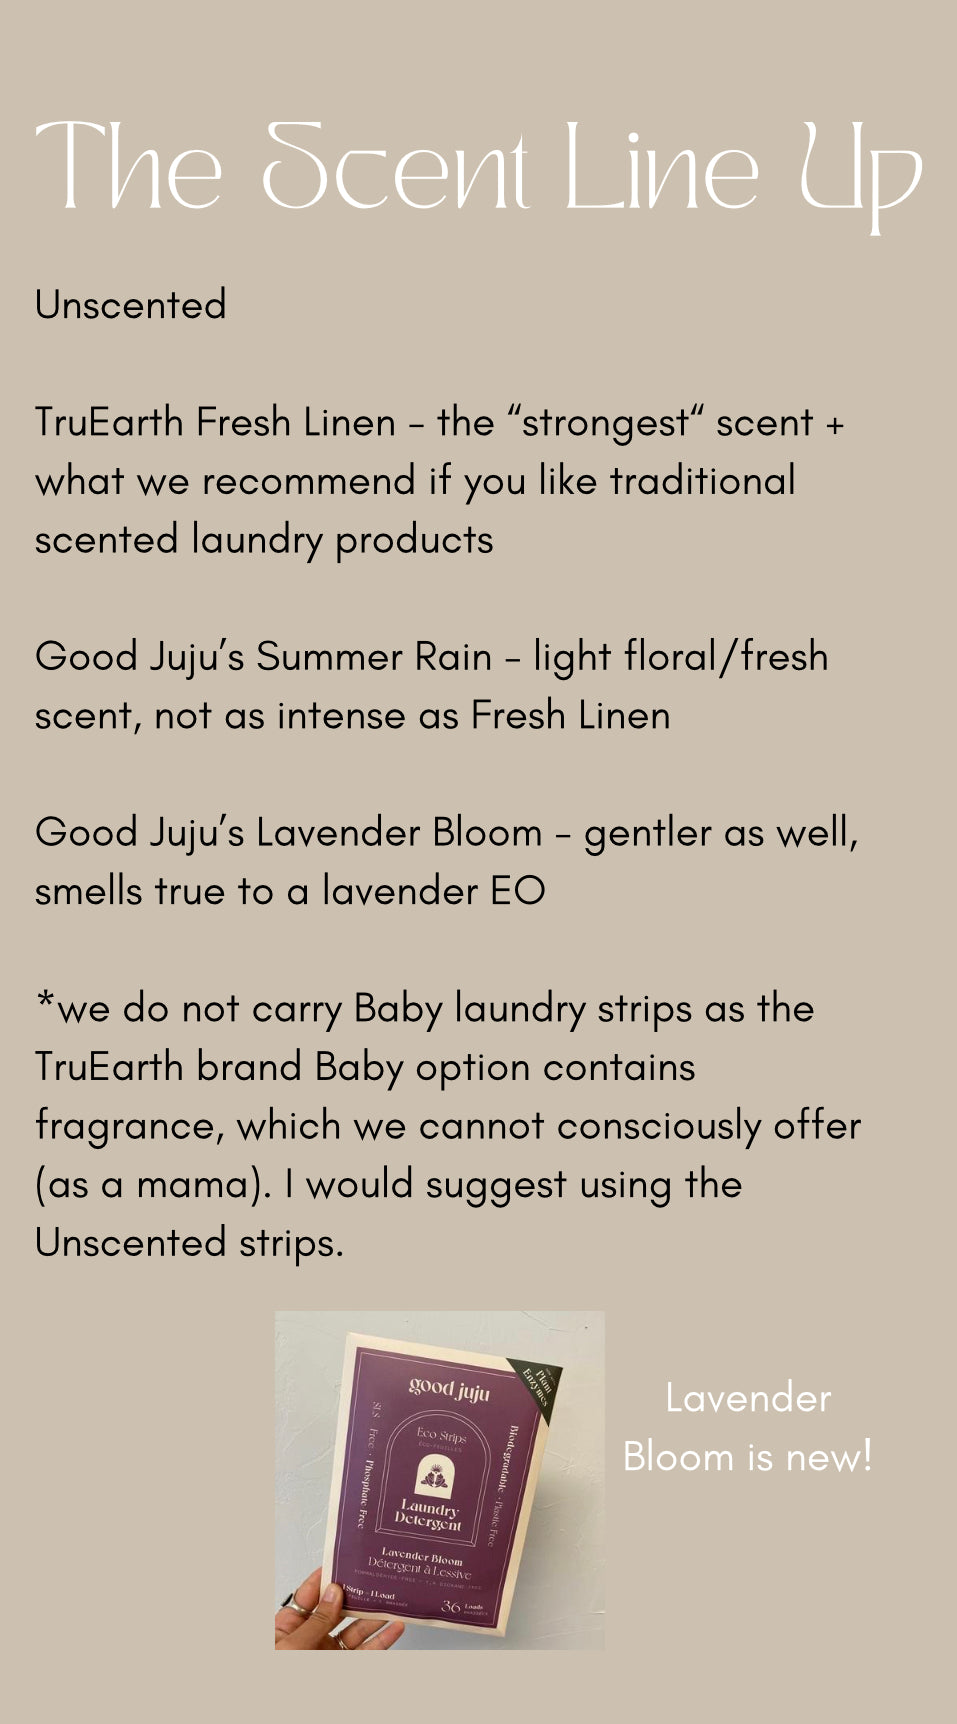 Good Juju Laundry Detergent Strips